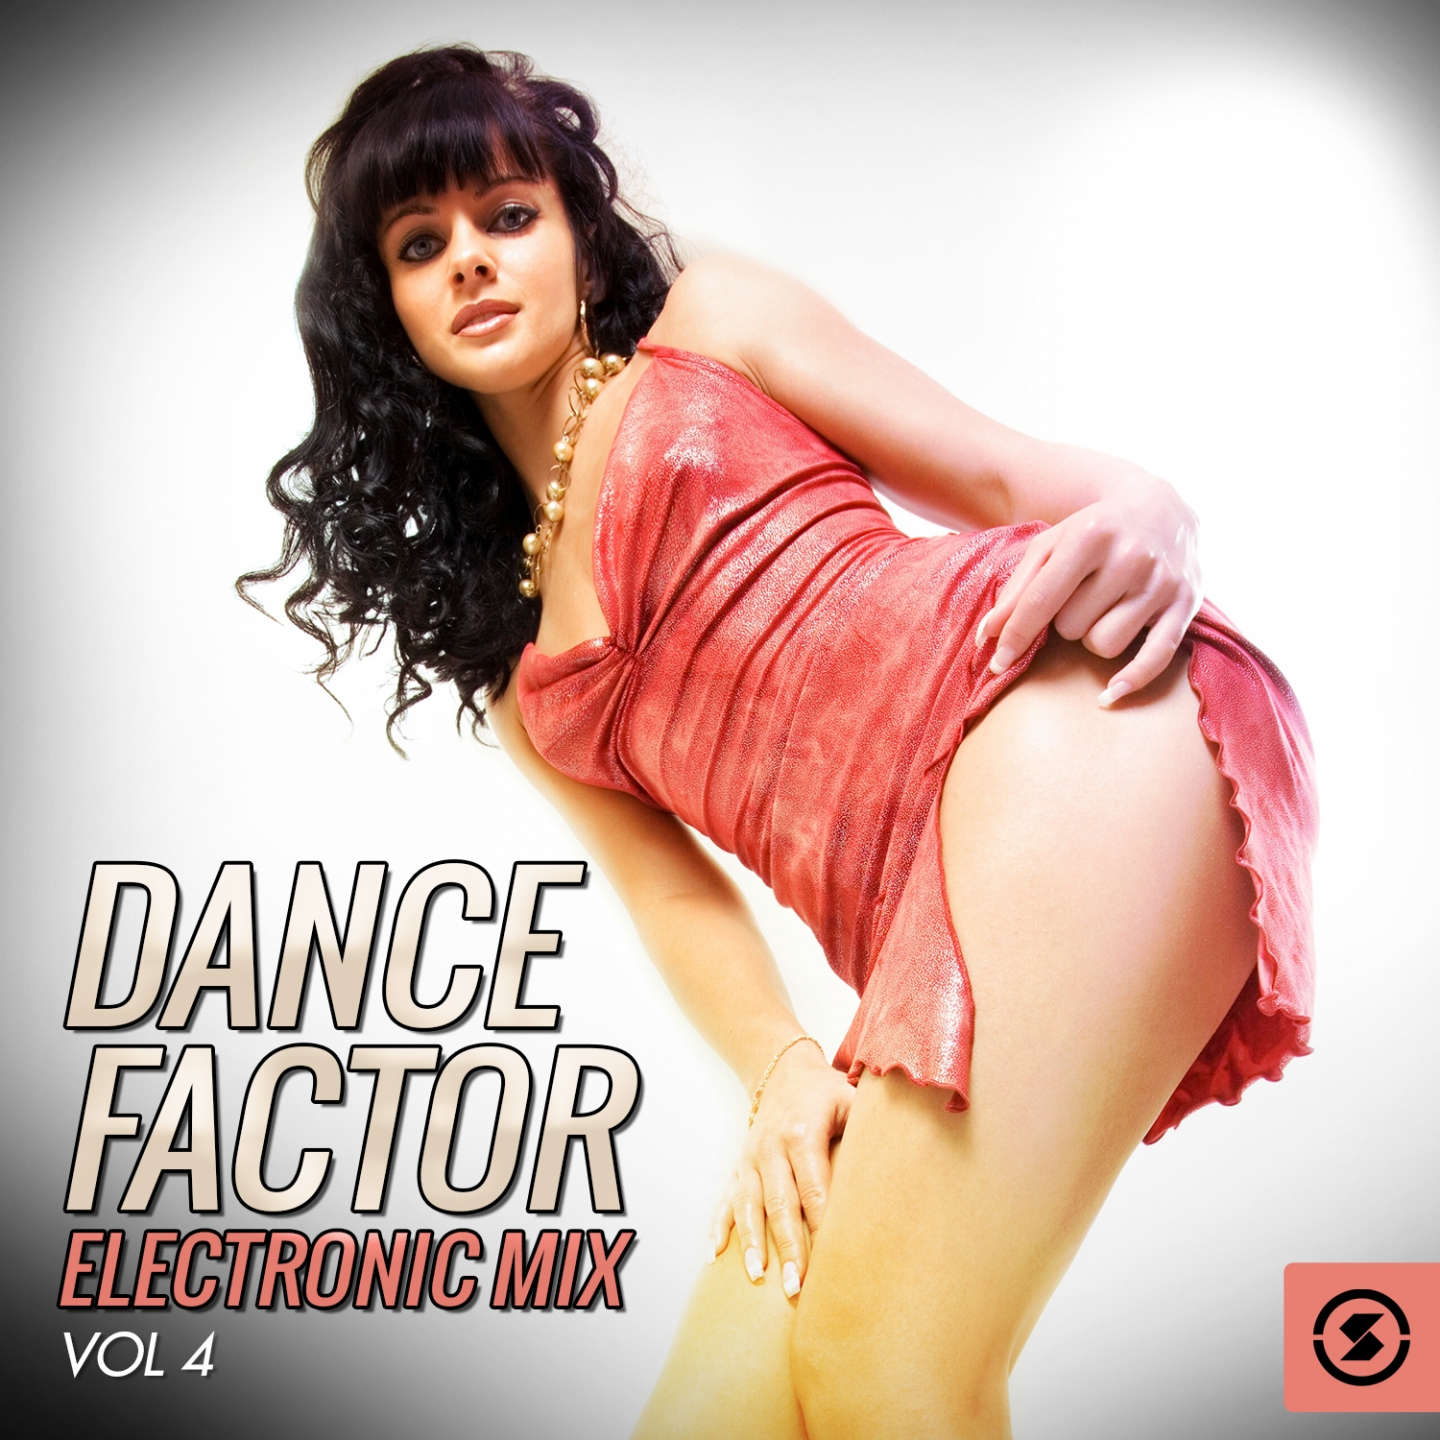 Dance Factor Electronic Mix, Vol. 4